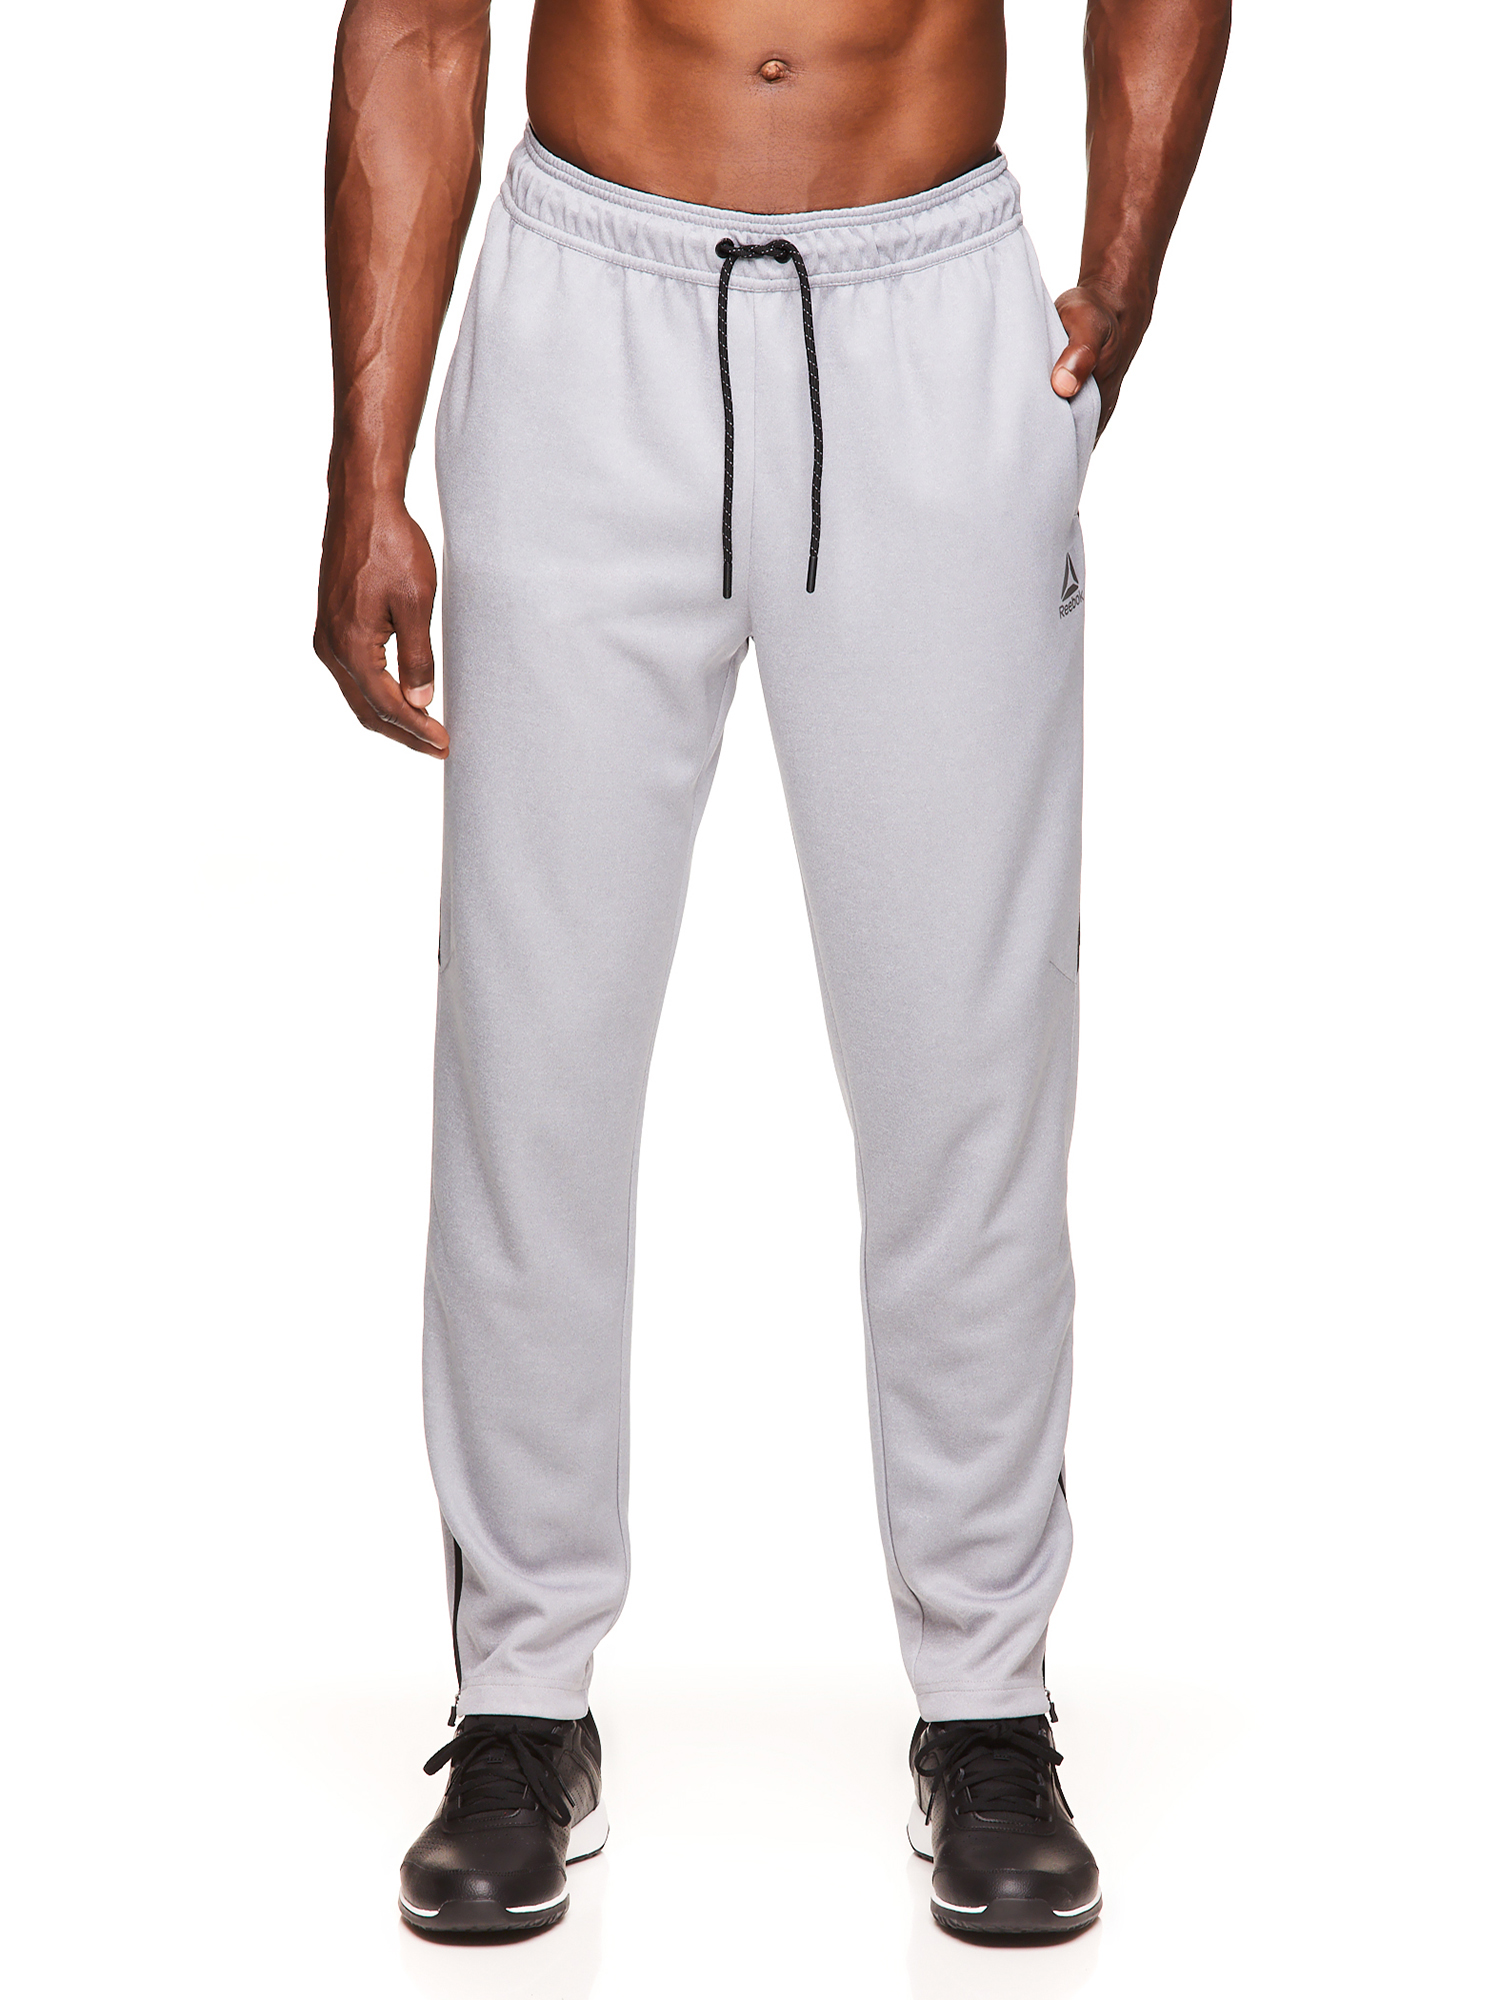 Reebok Men's and Big Men's Active Interlock Pants, up to Size 3XL - image 1 of 4